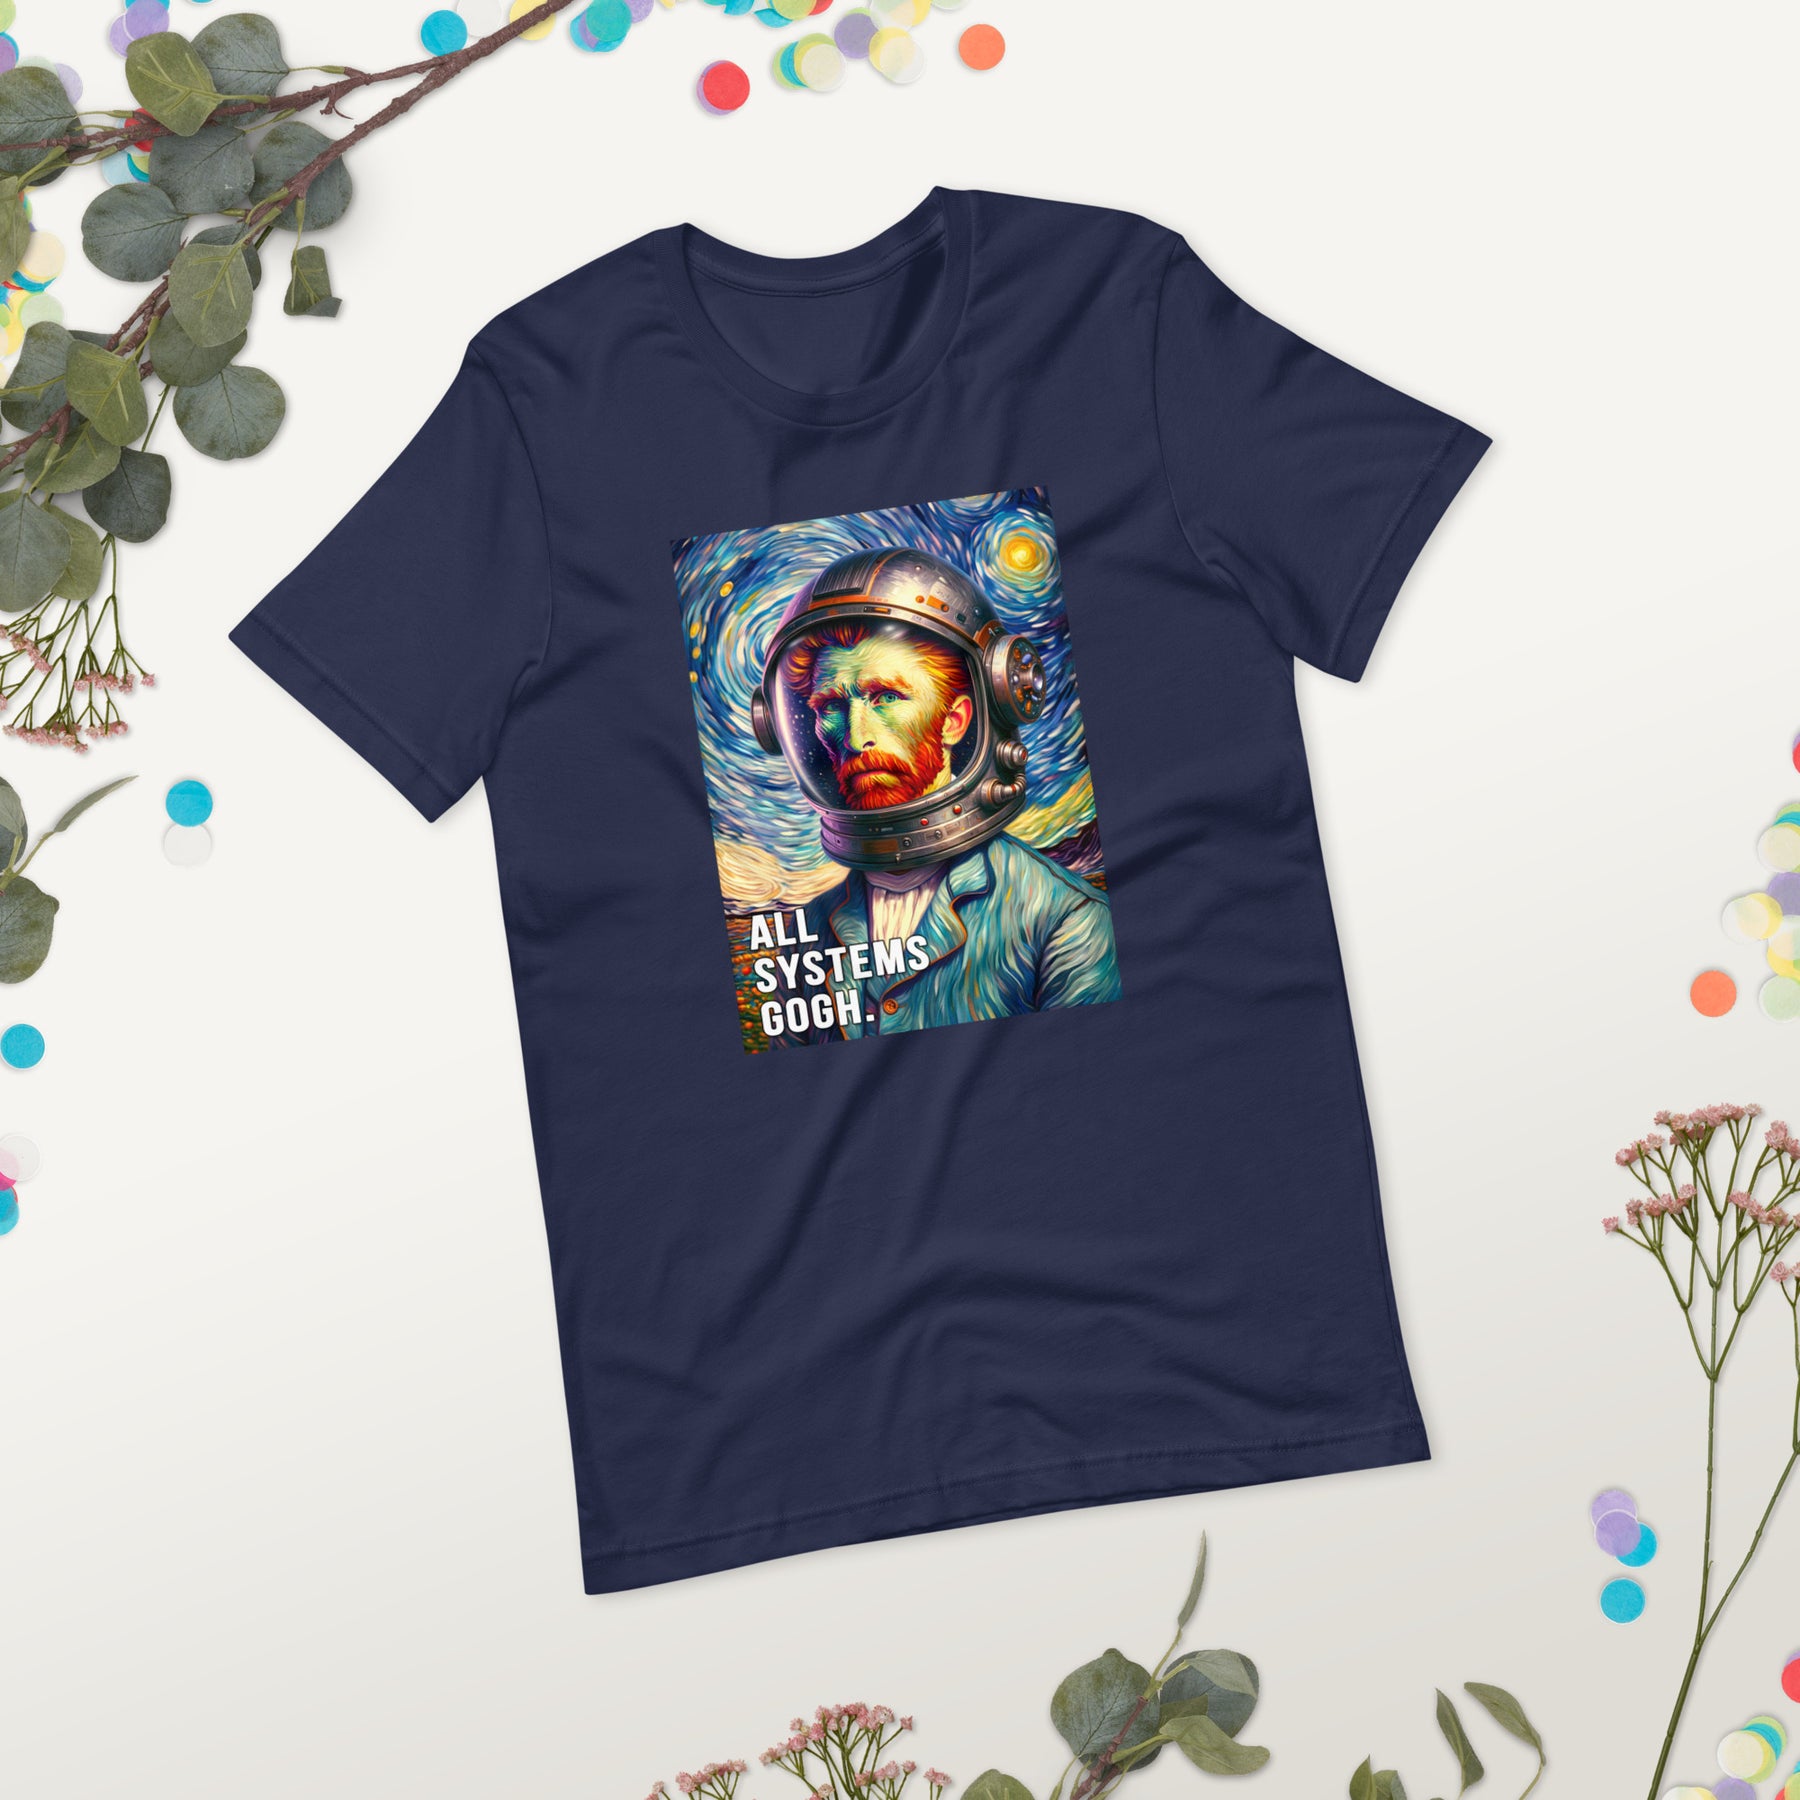 All System Gogh Shirt - Art & Space Lovers - Funny Van Gogh Pun Joke